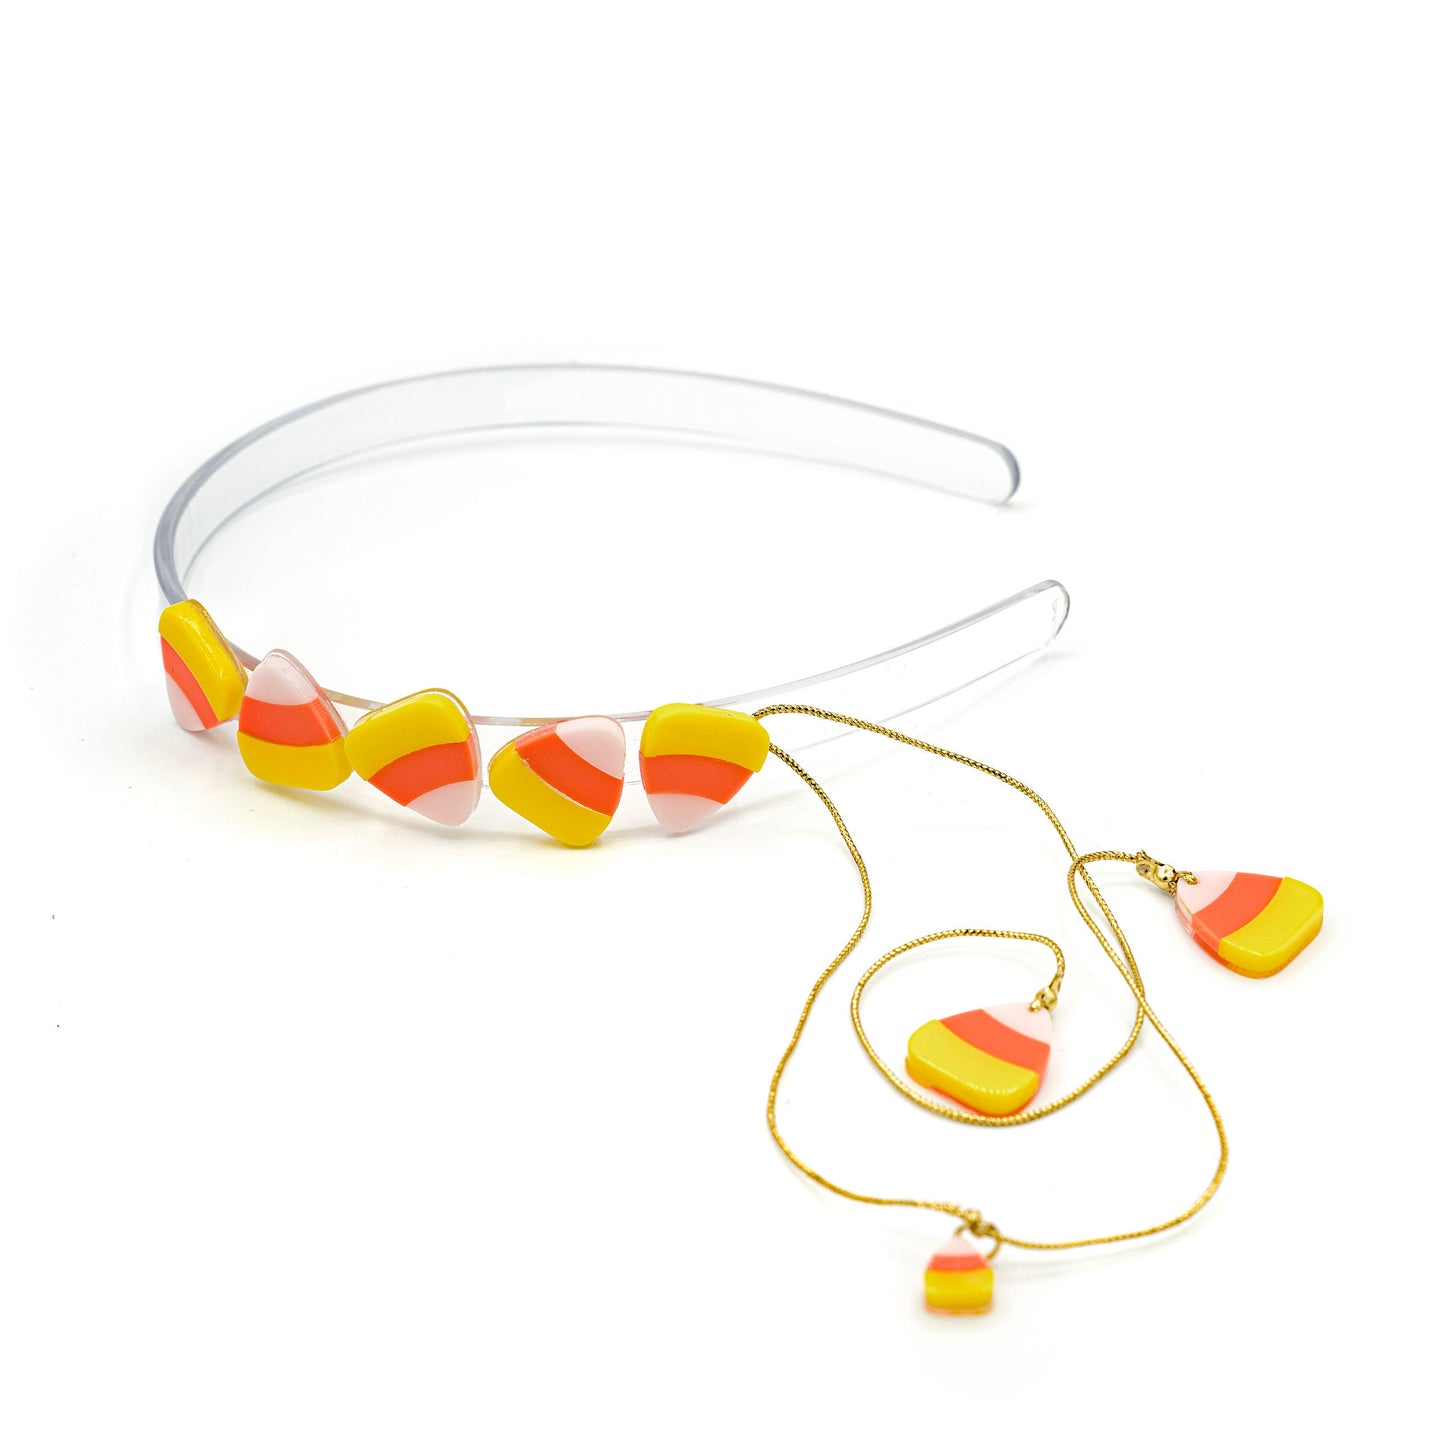 Acrylic Headband with 5 candy corn charms 